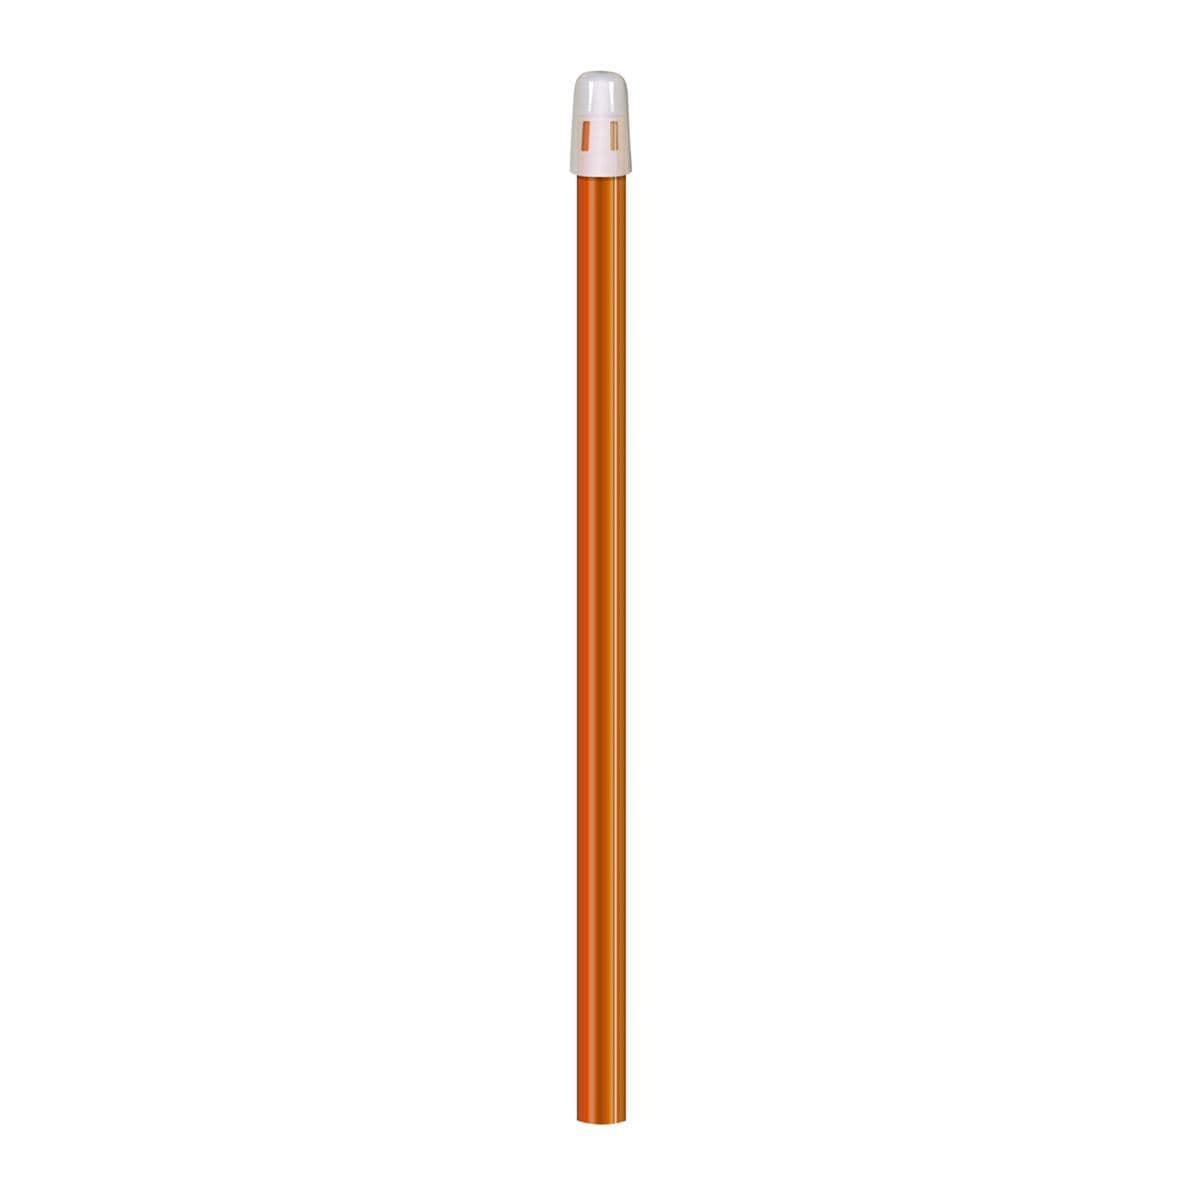 Saliva ejectors (15 cm) - Orange, 100 pcs